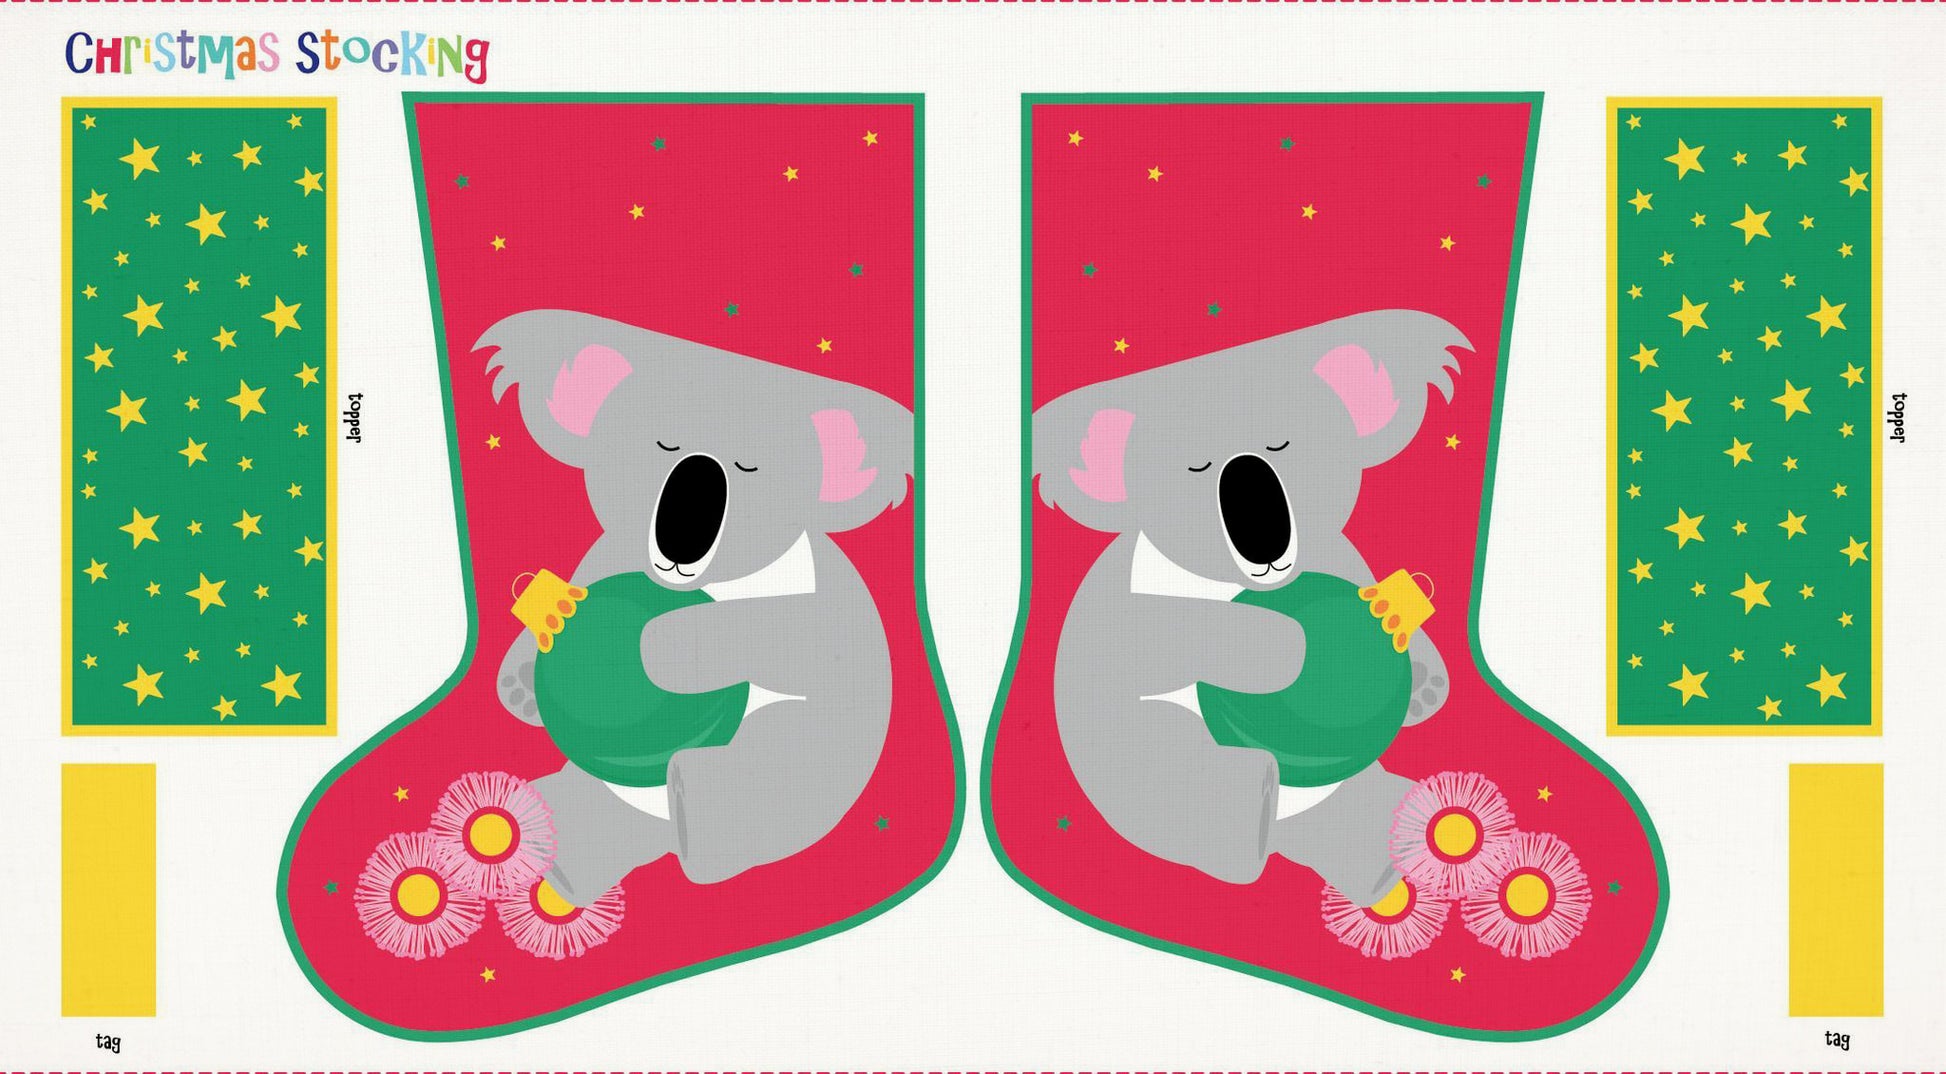 Australian Christmas stocking fabric panel with koala design